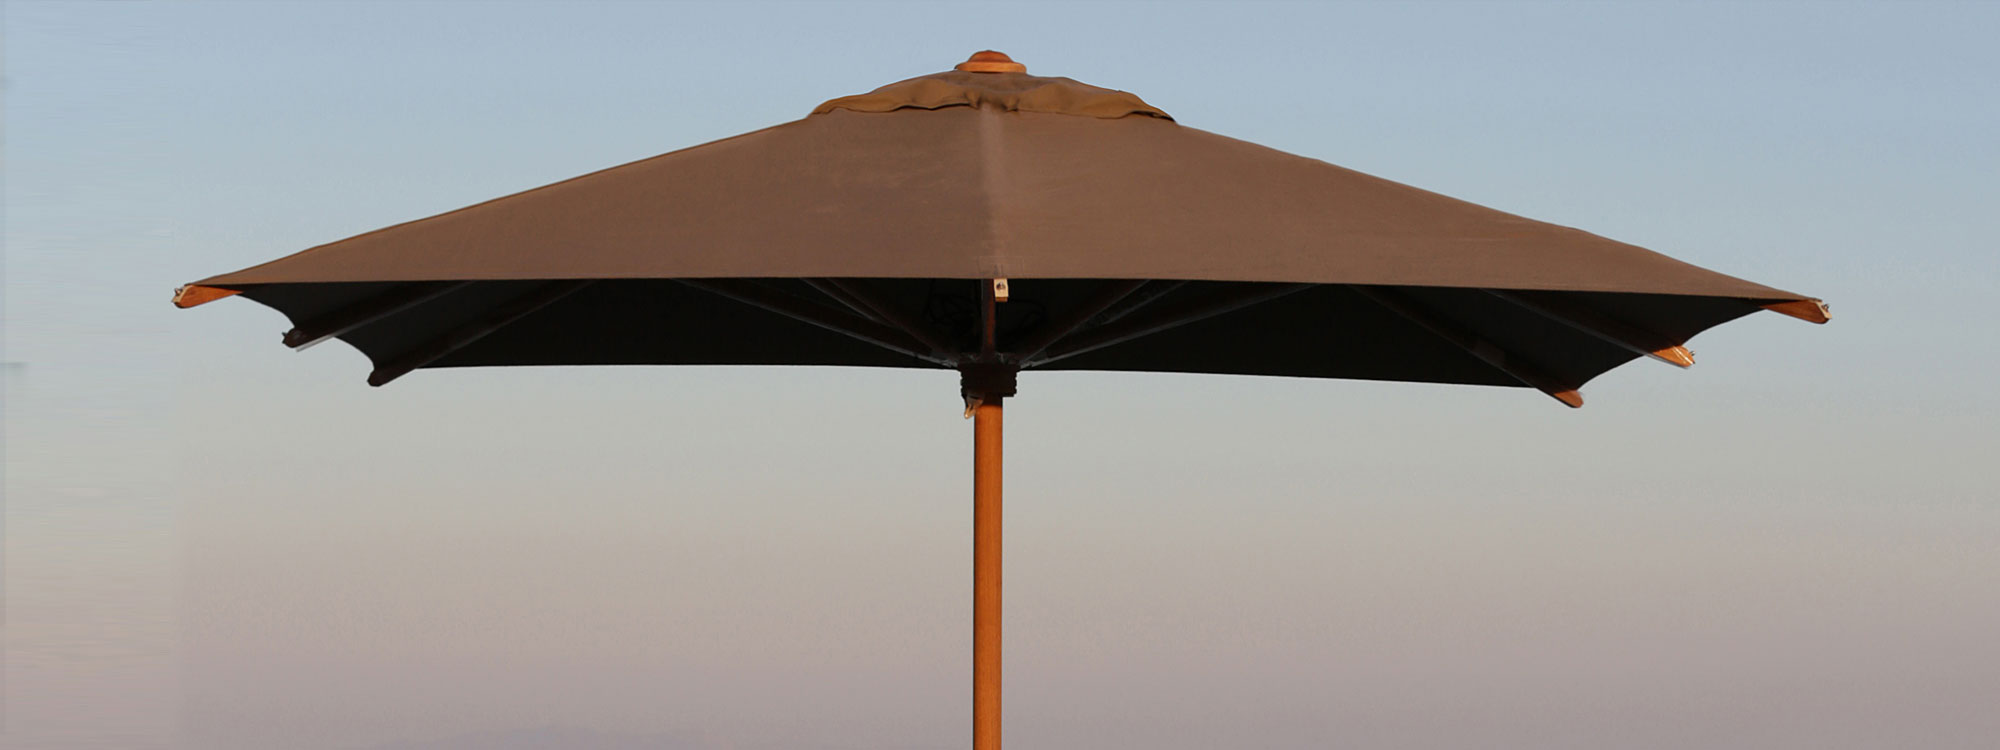 Image of Shady teak parasol by Royal Botania against sky at dusk